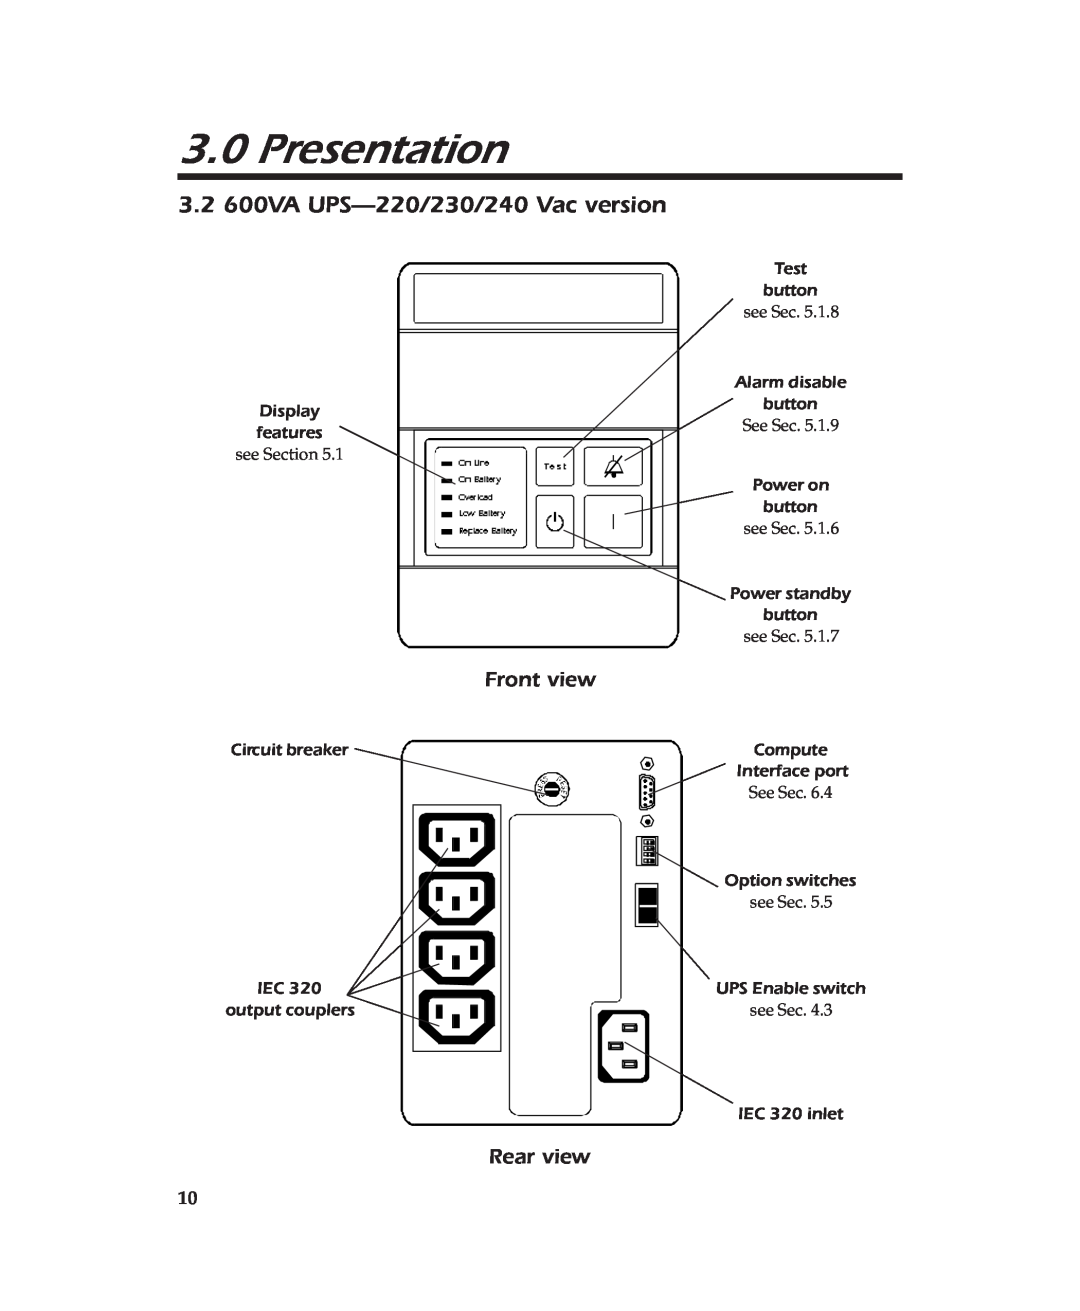 APC user manual 3.2 600VA UPS-220/230/240Vac version, Presentation 